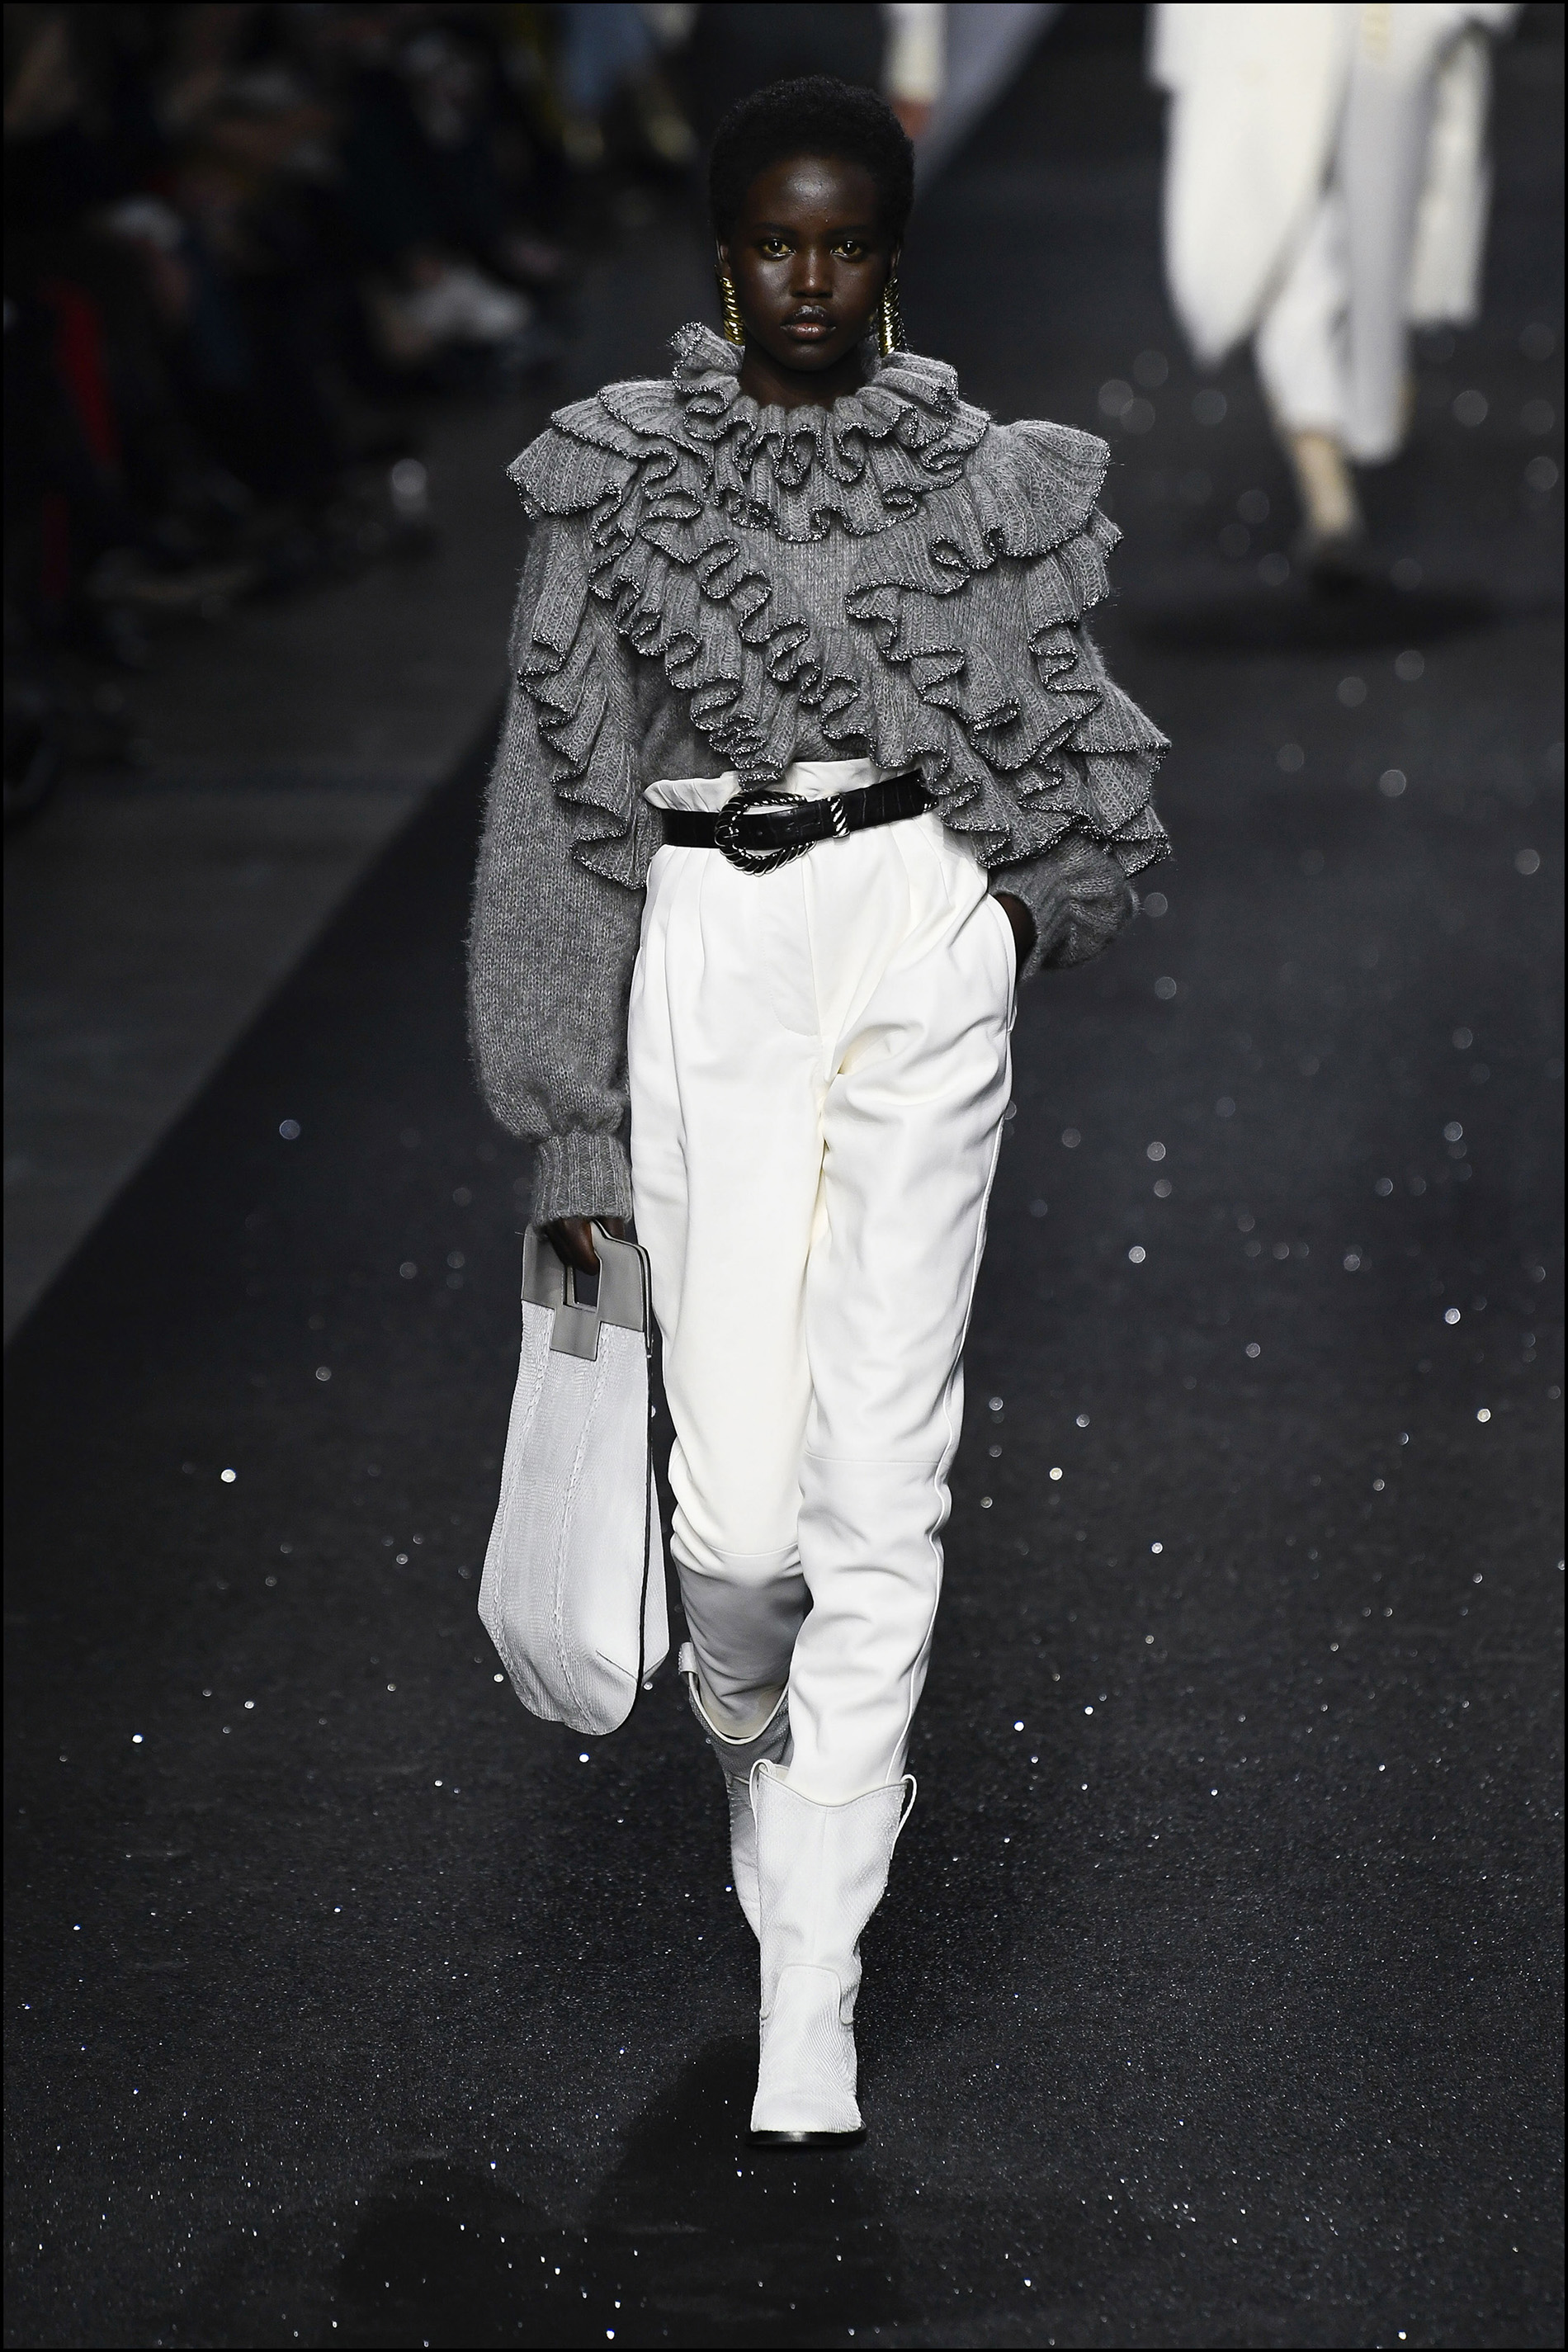 DÈfilÈ de mode "Alberta Ferretti" PAP automne-hiver 2019/2020 lors de la fashion week de Milan. Le 20 fÈvrier 2019 Alberta Ferretti fashion show F/W 2019/2020 in Milan. On february 20th 2019